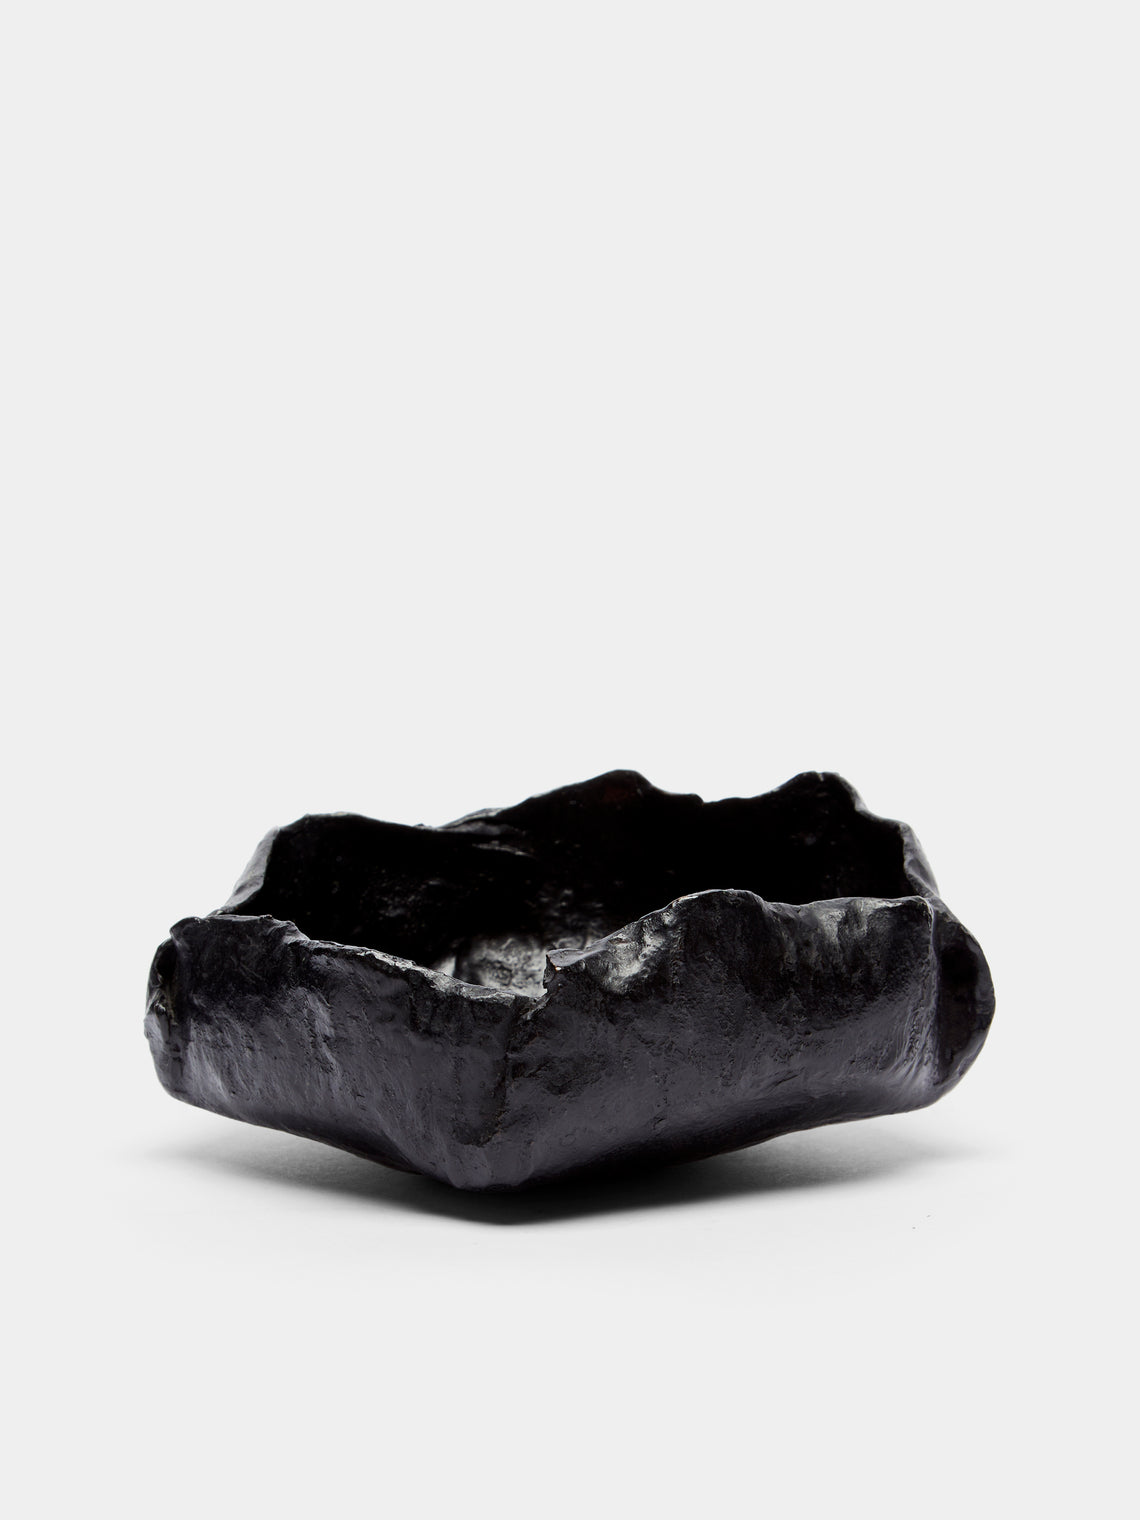 Osanna Visconti - Naturalism Hand-Cast Bronze Bowl - Black - ABASK - 